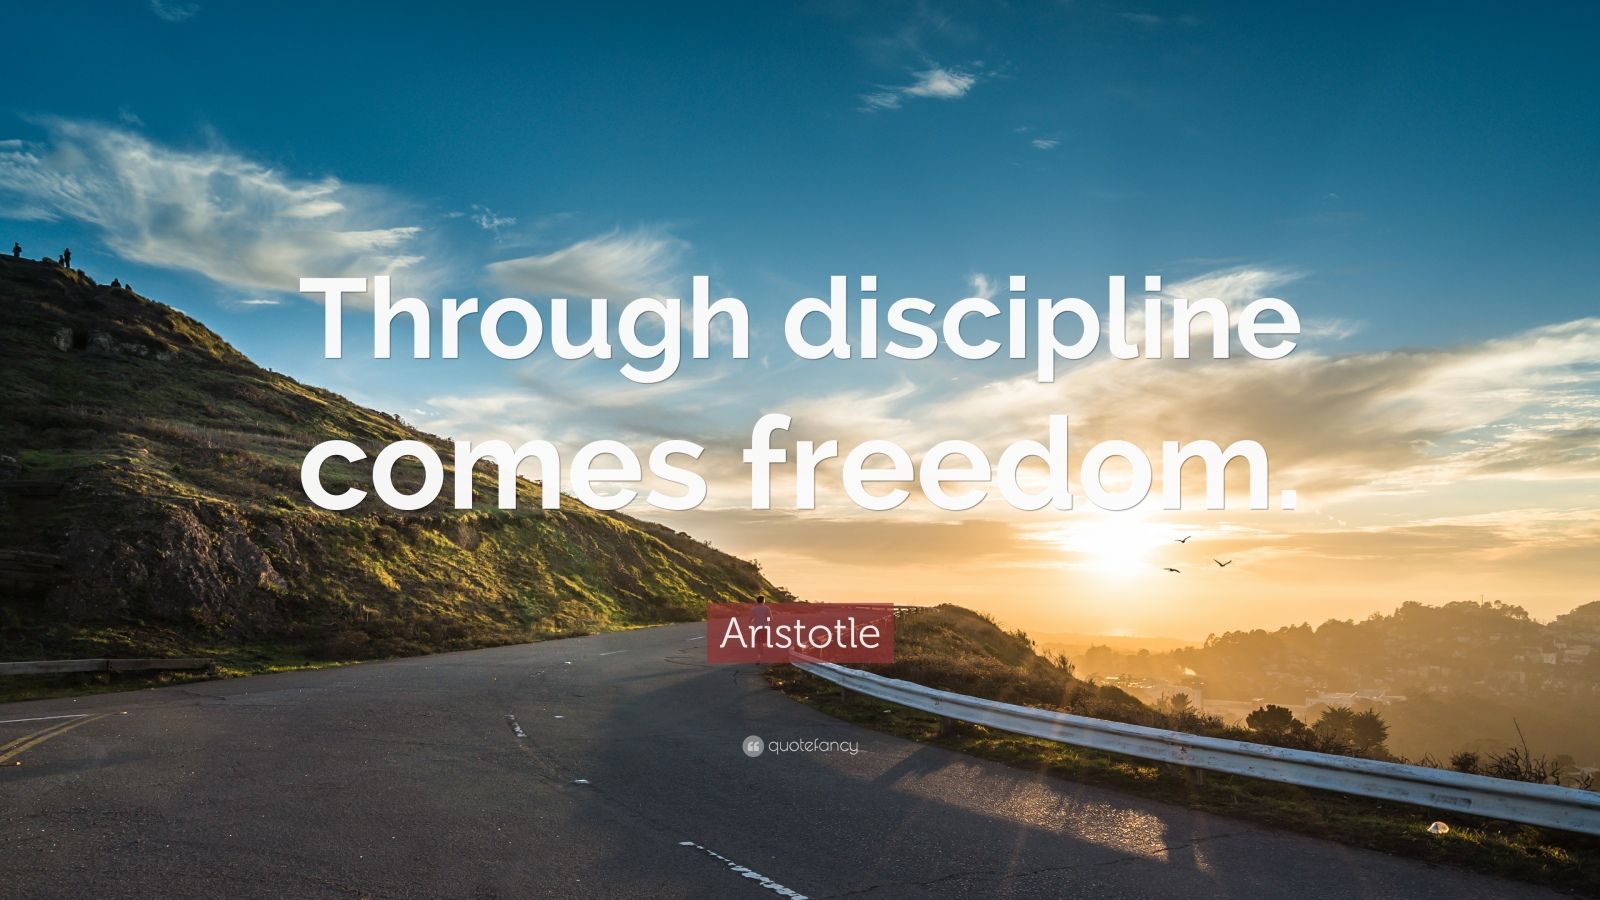 Aristotle Quote: “Through discipline comes freedom.” (33 wallpapers) - Quotefancy